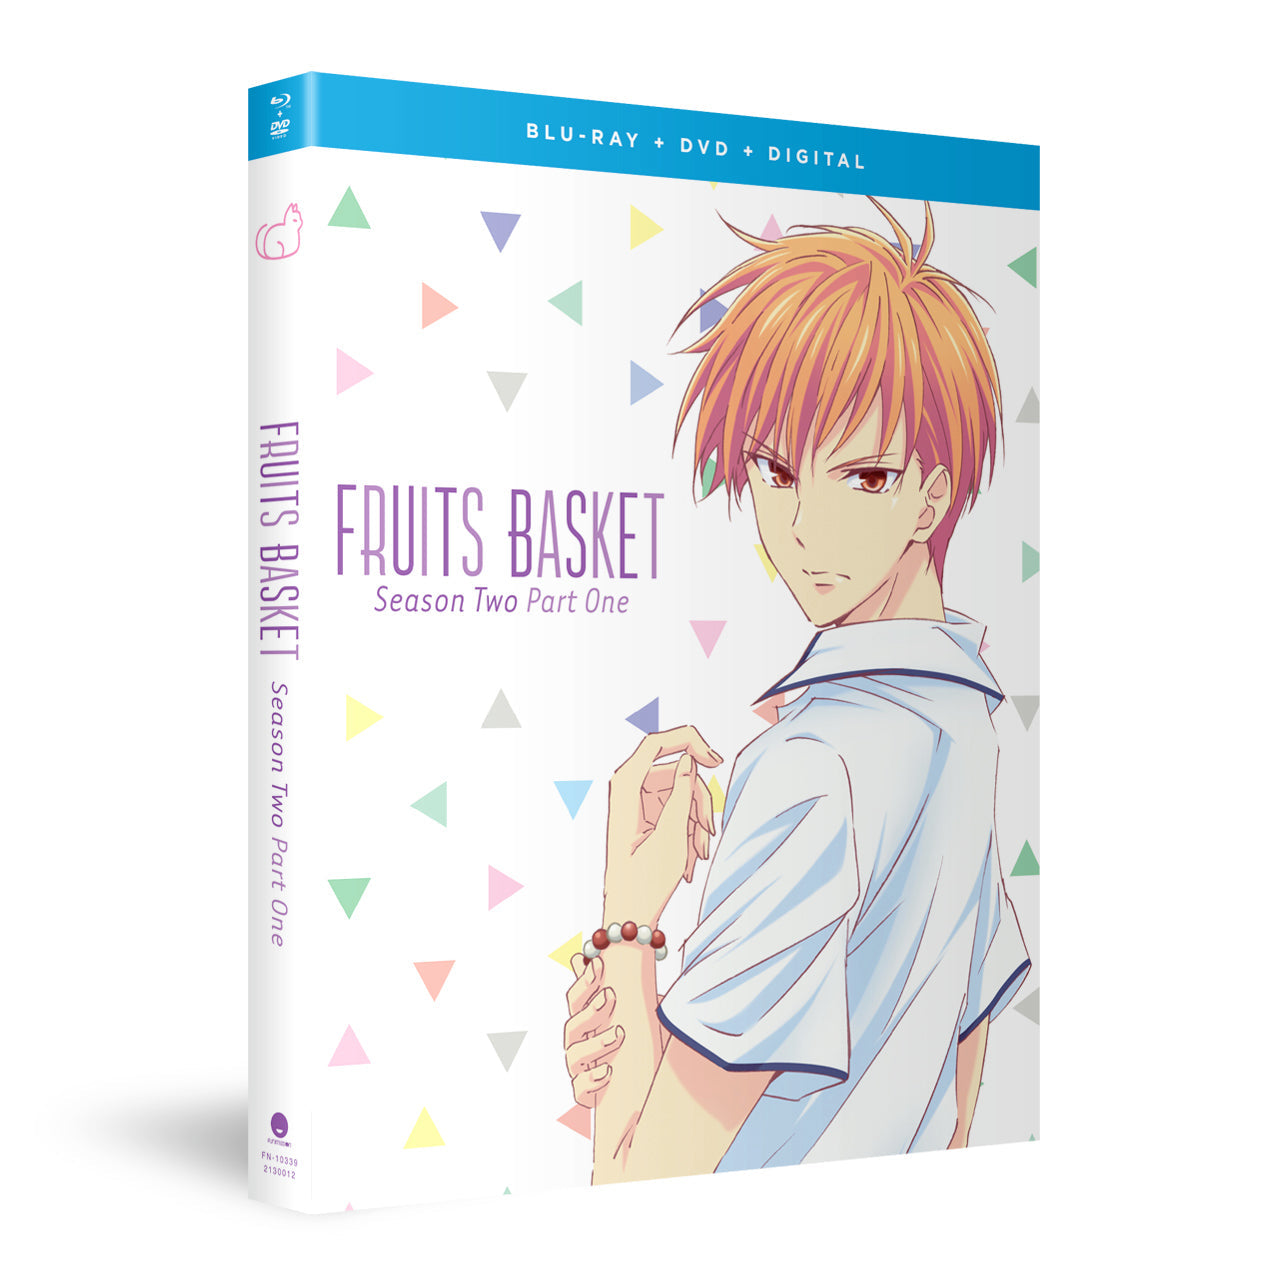 Fruits Basket (2019) - Season 2 Part 1 - Blu-ray + DVD image count 3